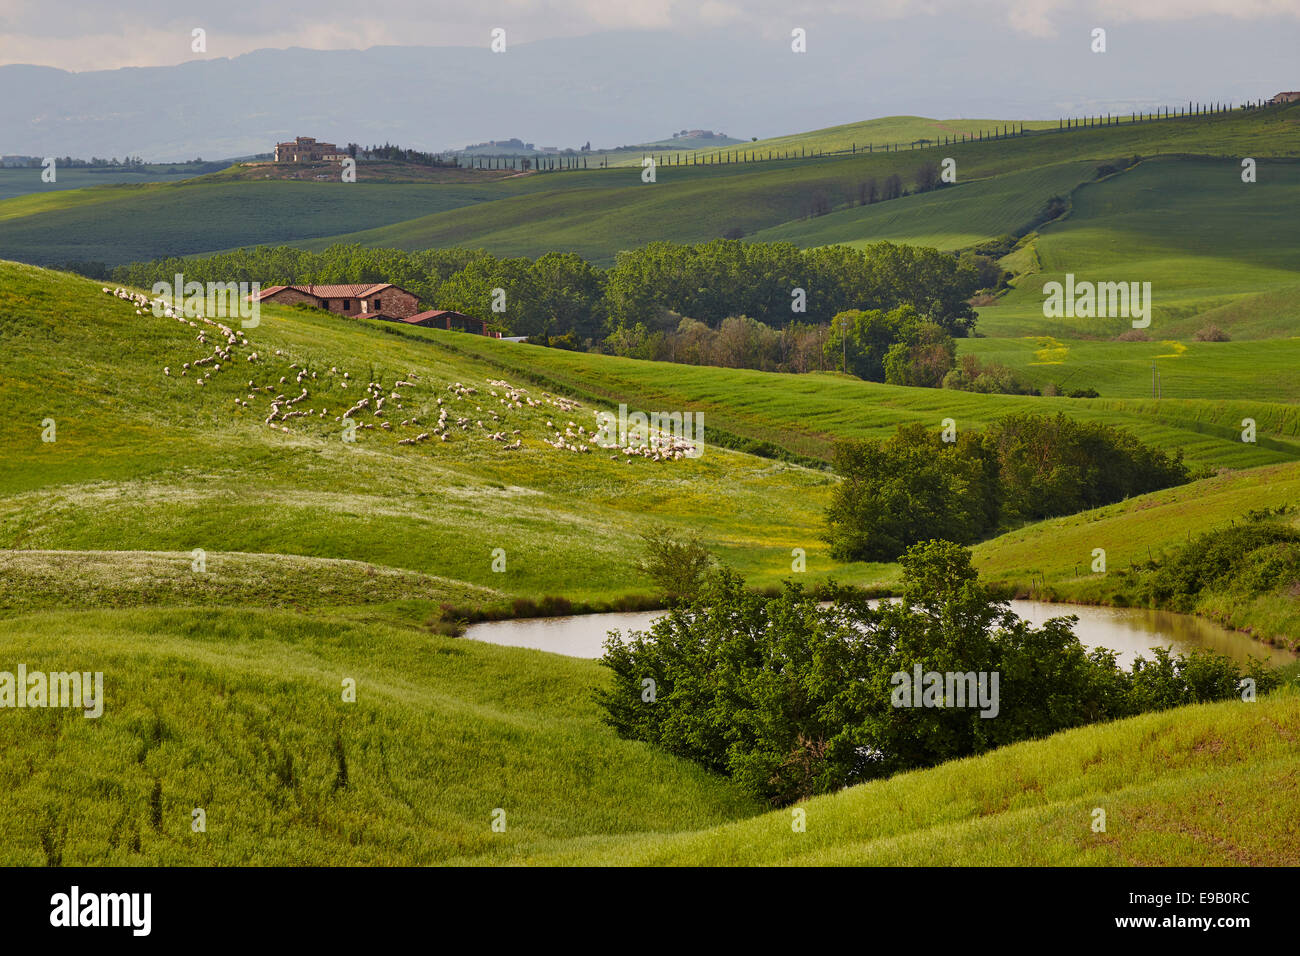 Hilly landscape of the Crete Senesi with flock of sheep, Asciano, Arbia, Tuscany, Italy Stock Photo